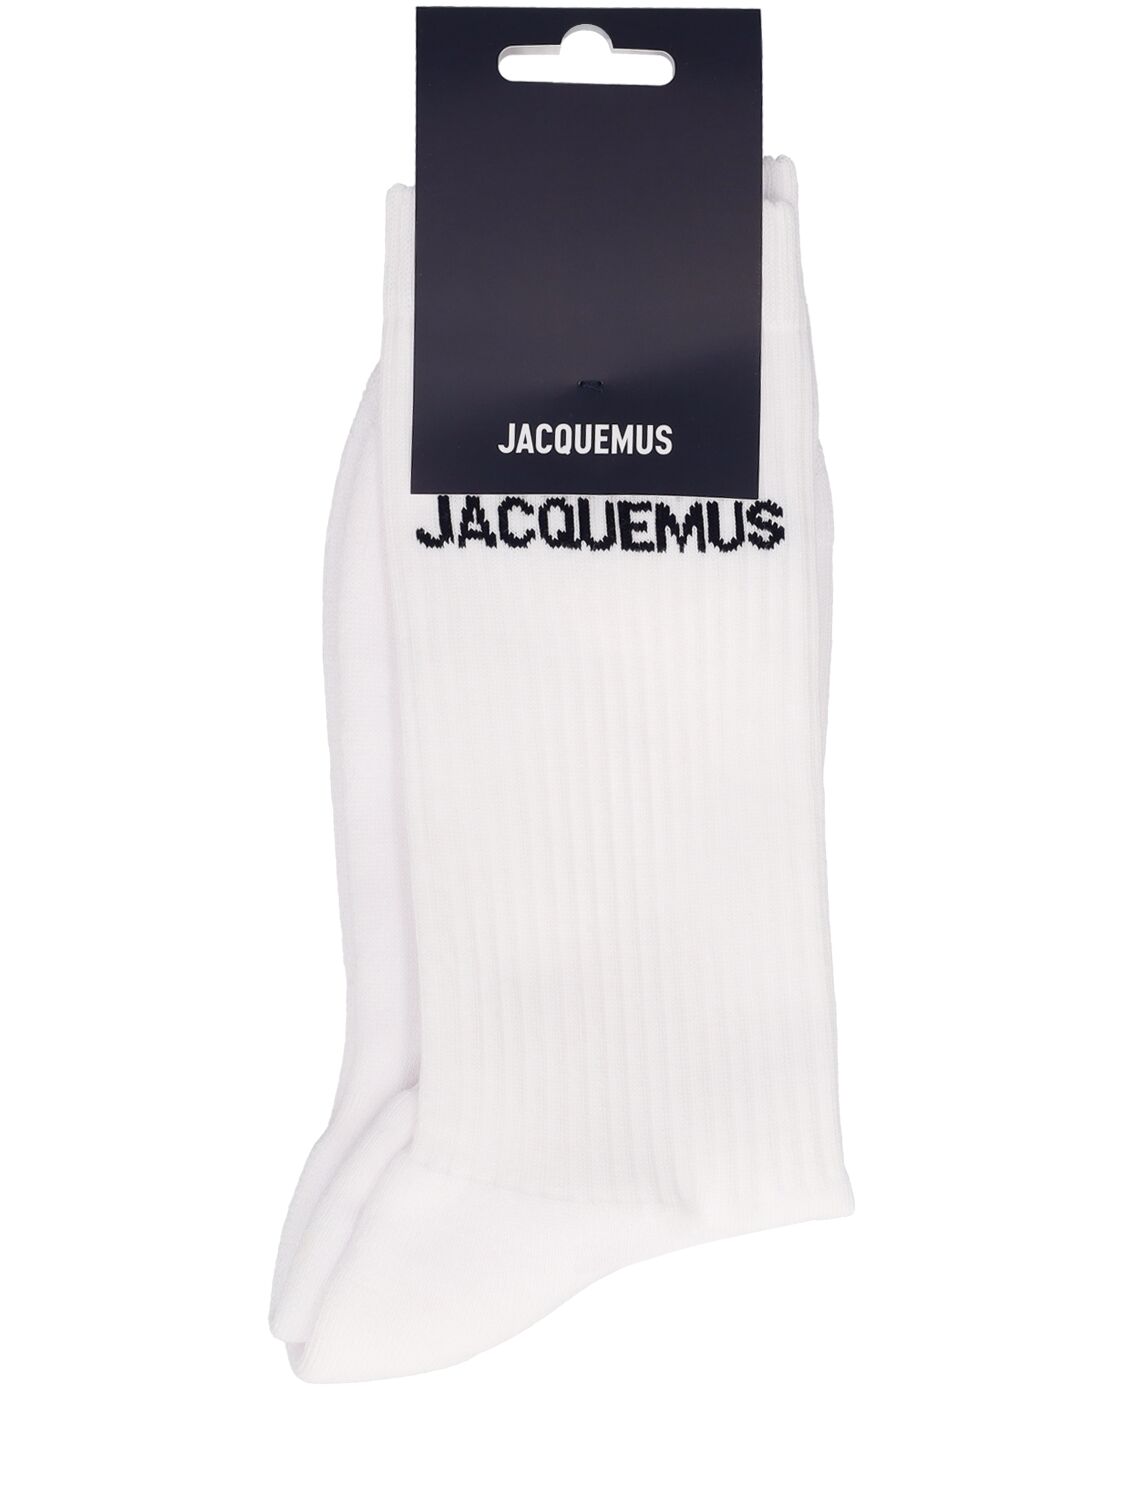 Jacquemus Les Chaussettes  Cotton Socks In White